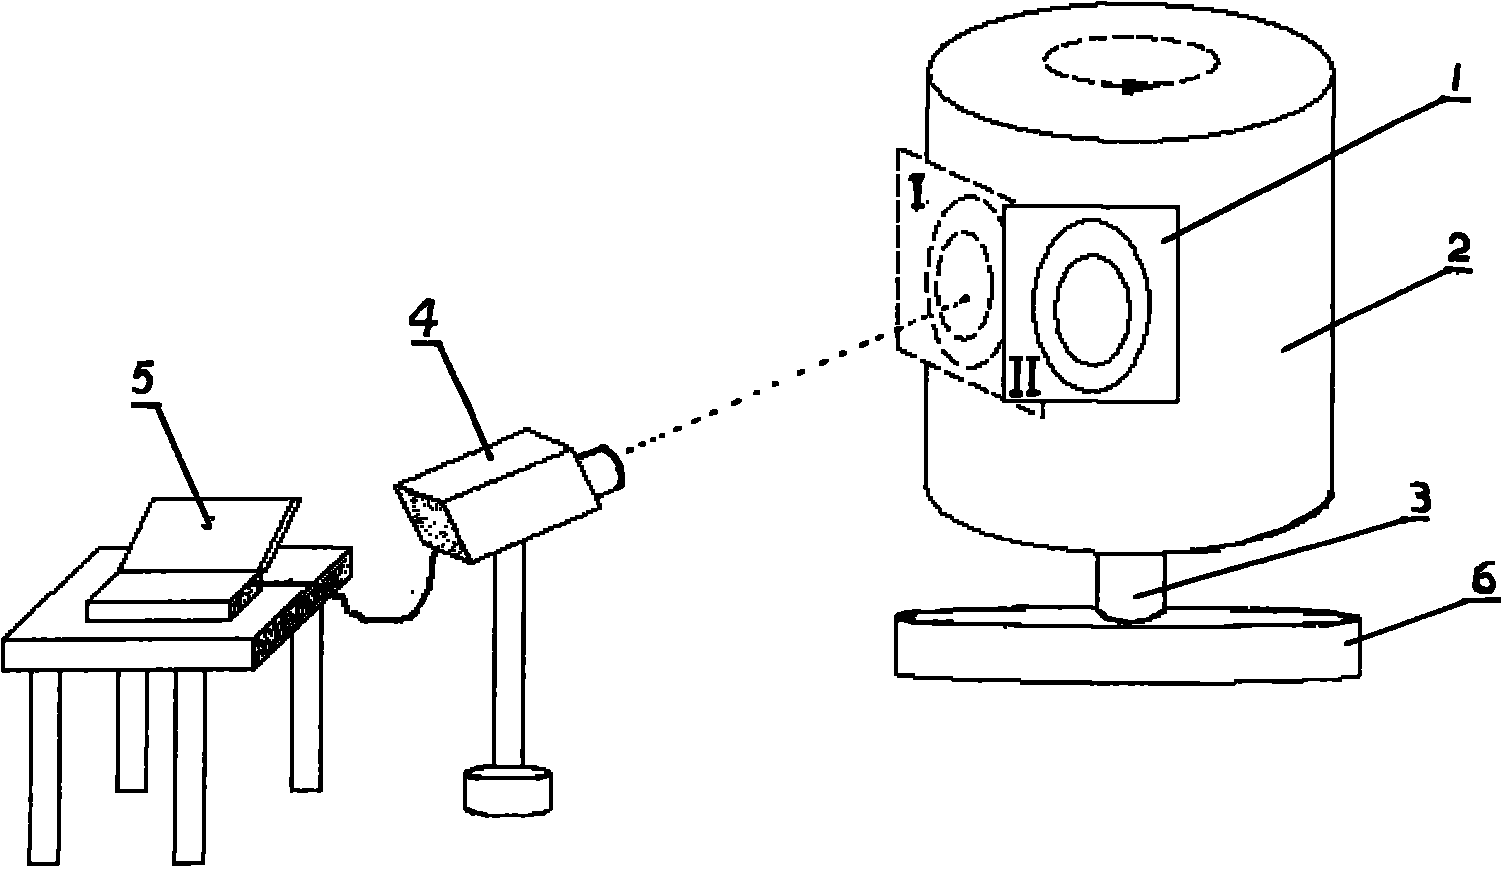 Monocular vision measuring method of non-contact precision measuring corner